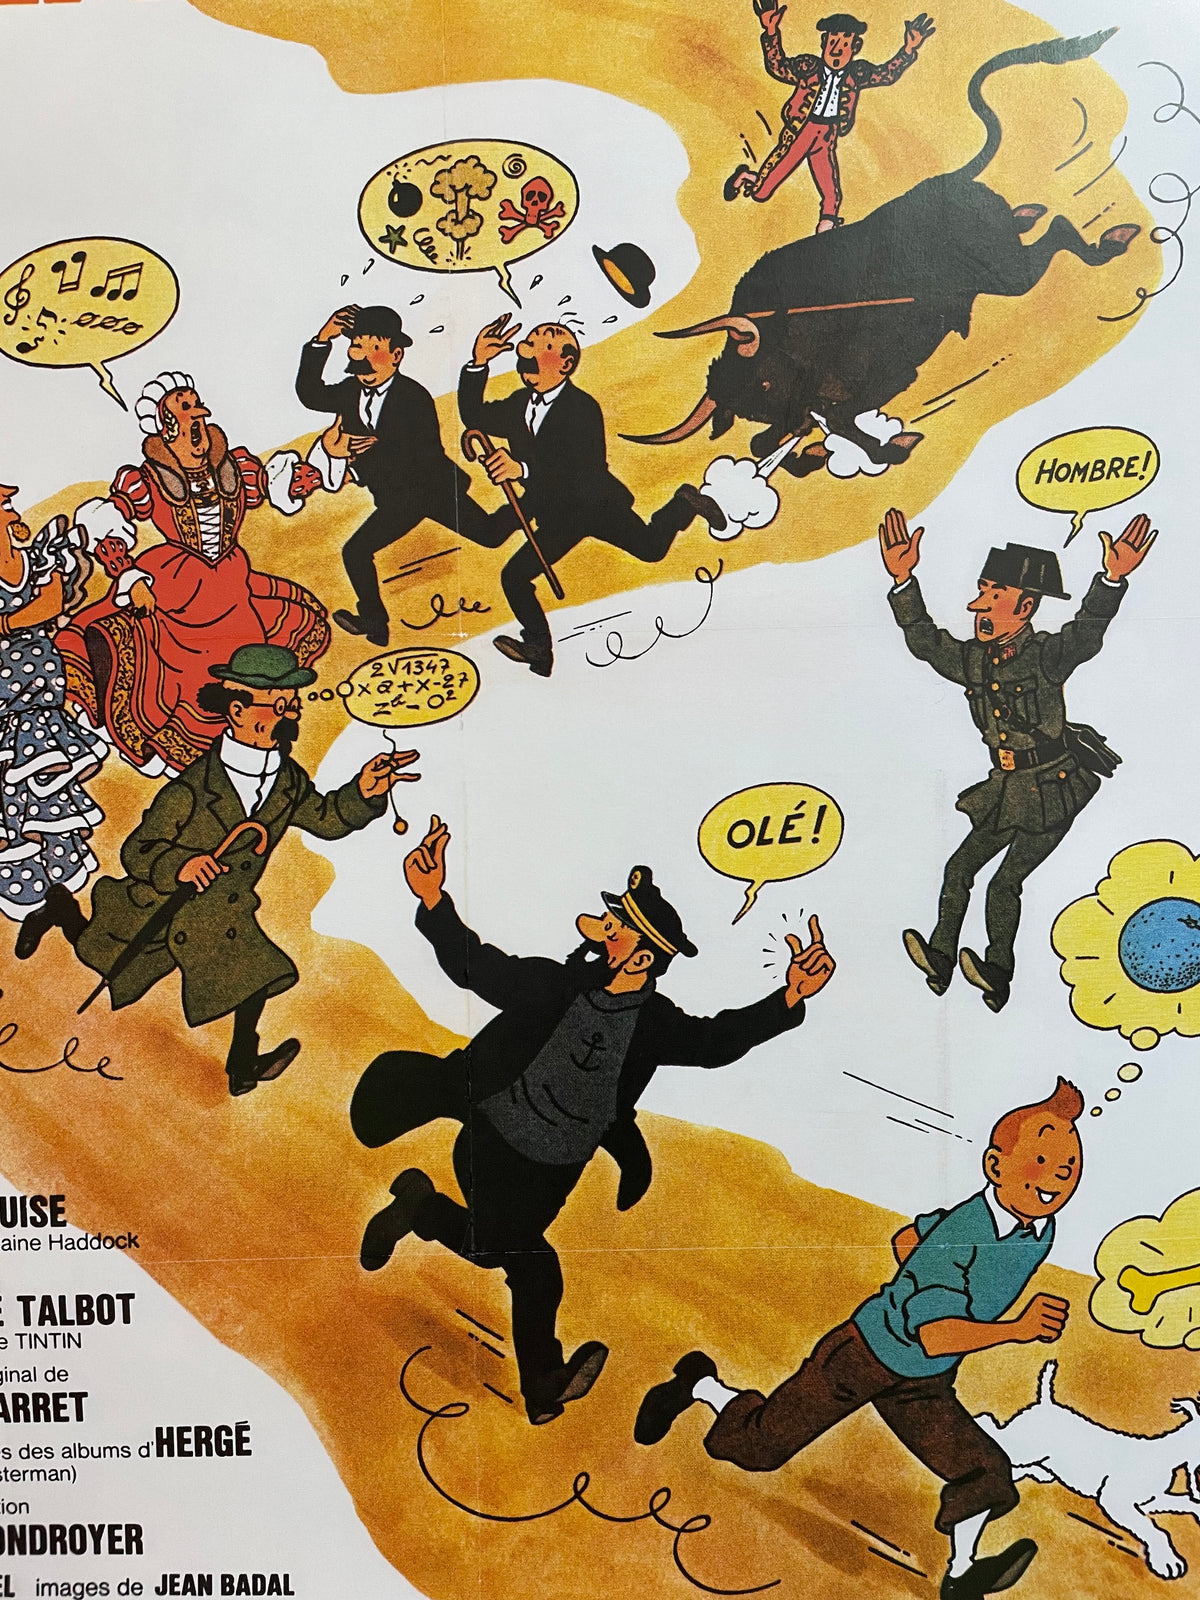 Tintin et les Oranges Bleues by Herge